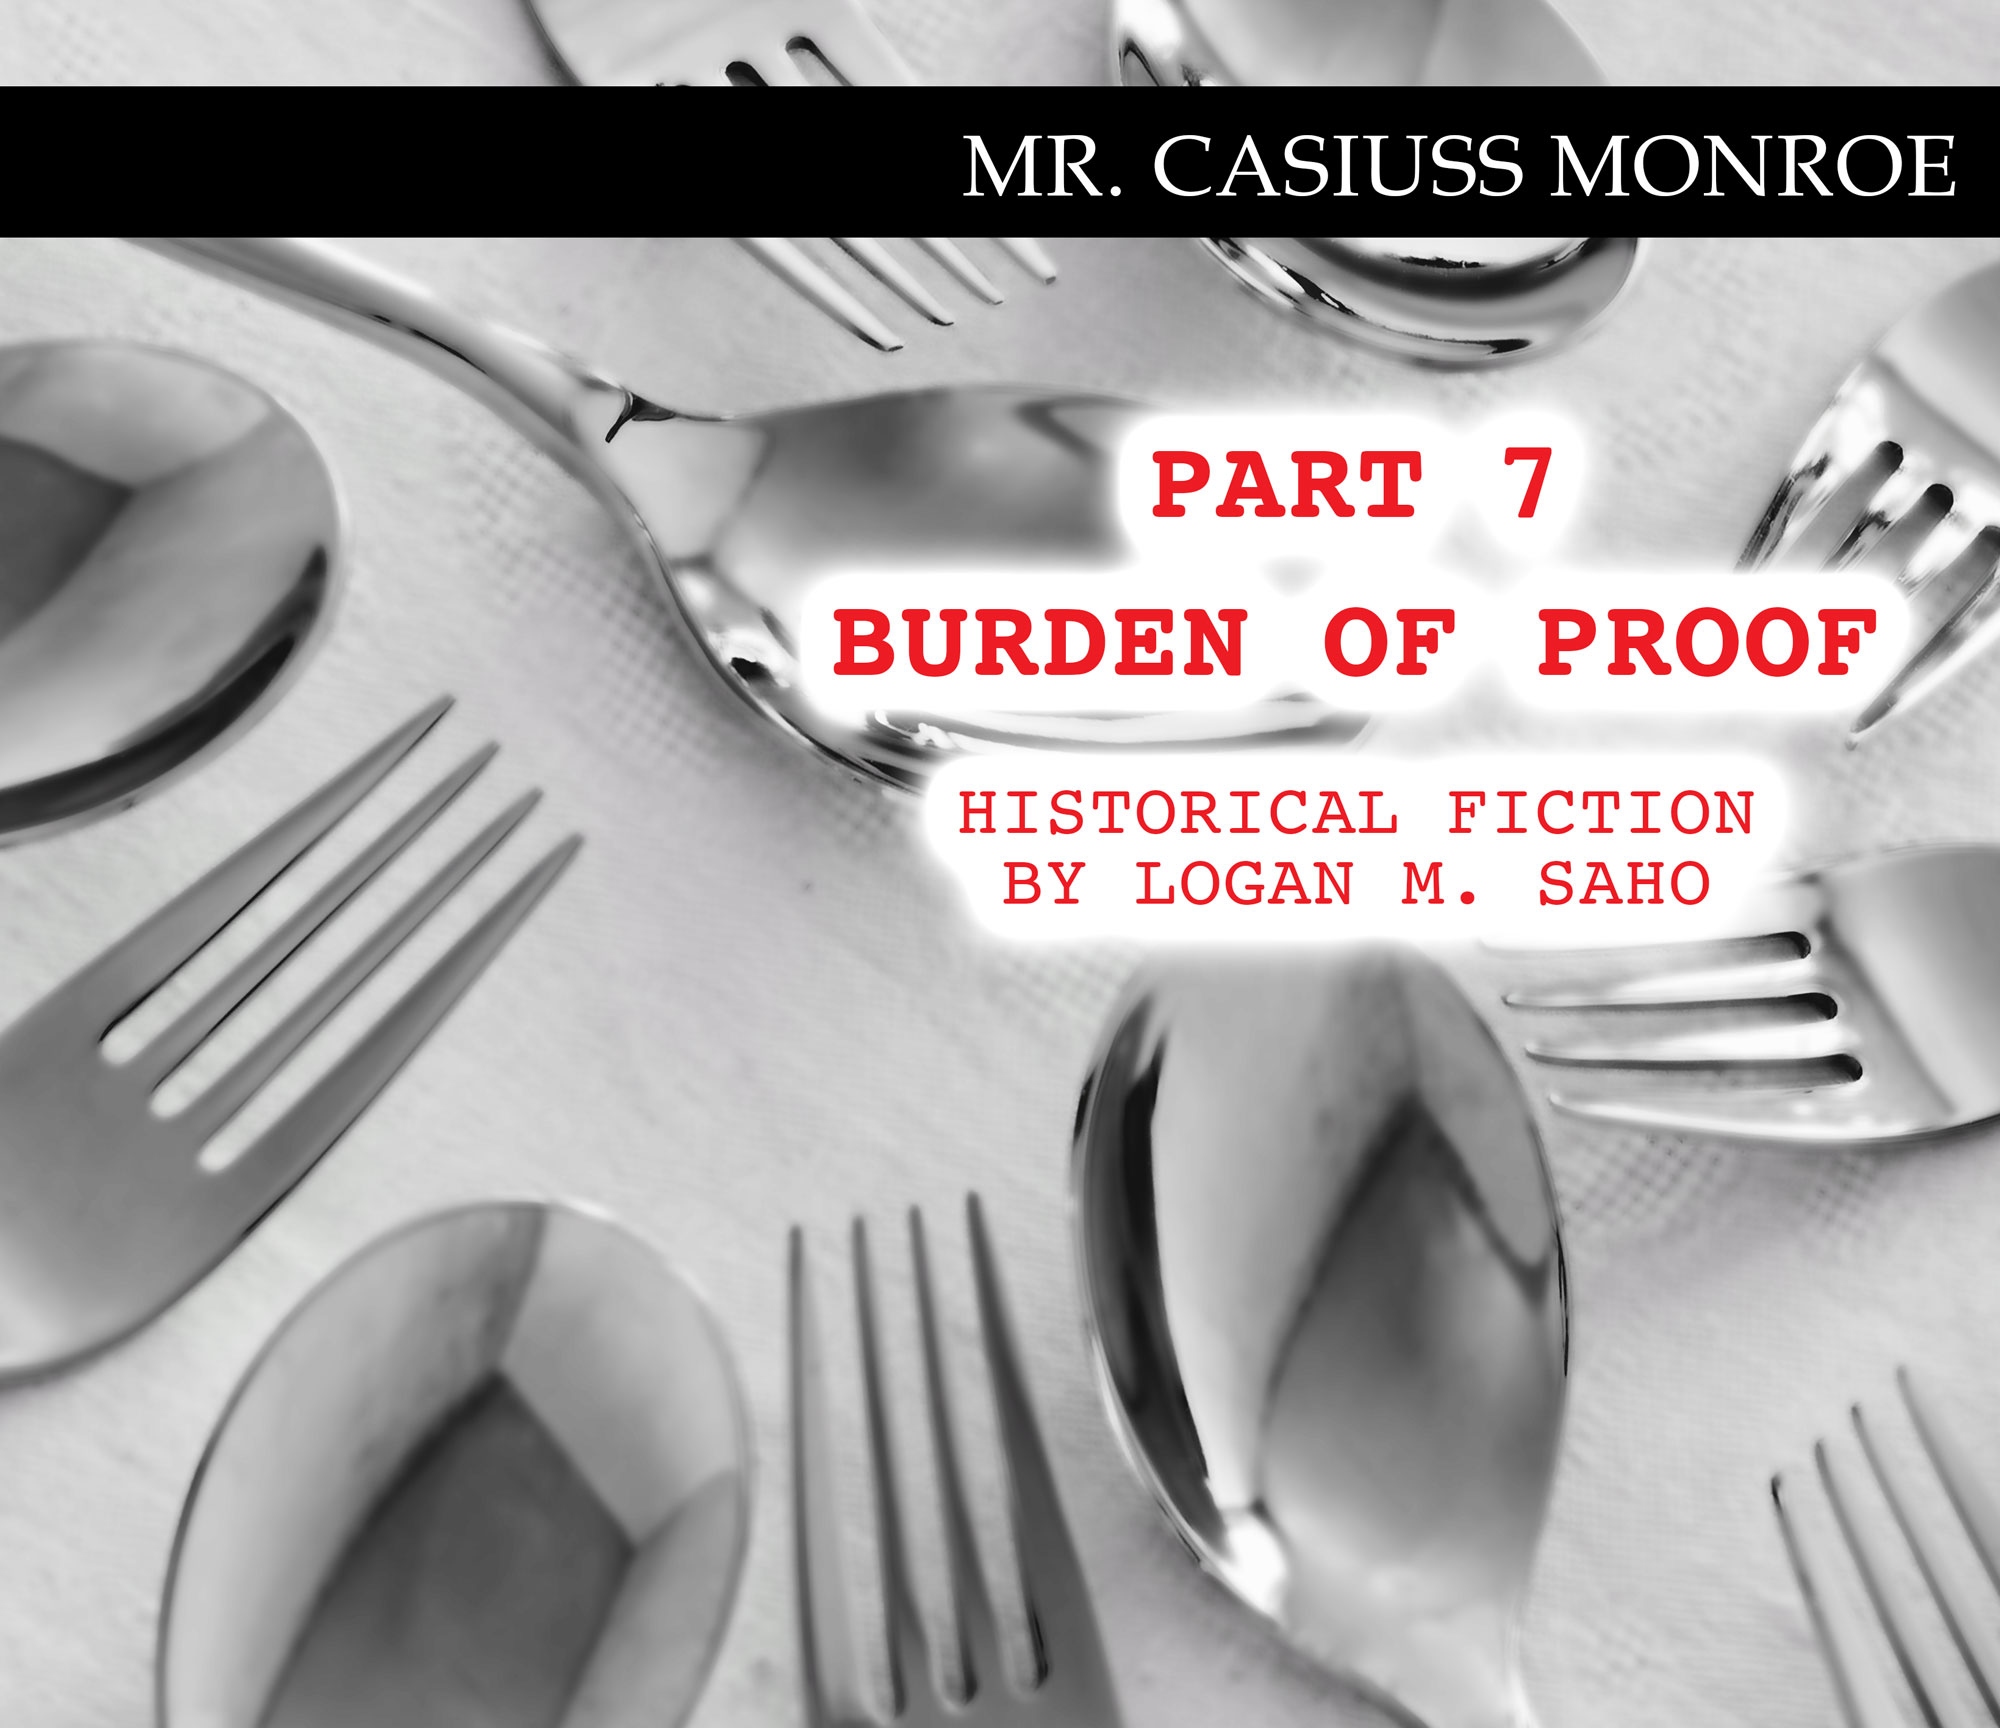 Historical Fiction Pt 7 Burden of Proof